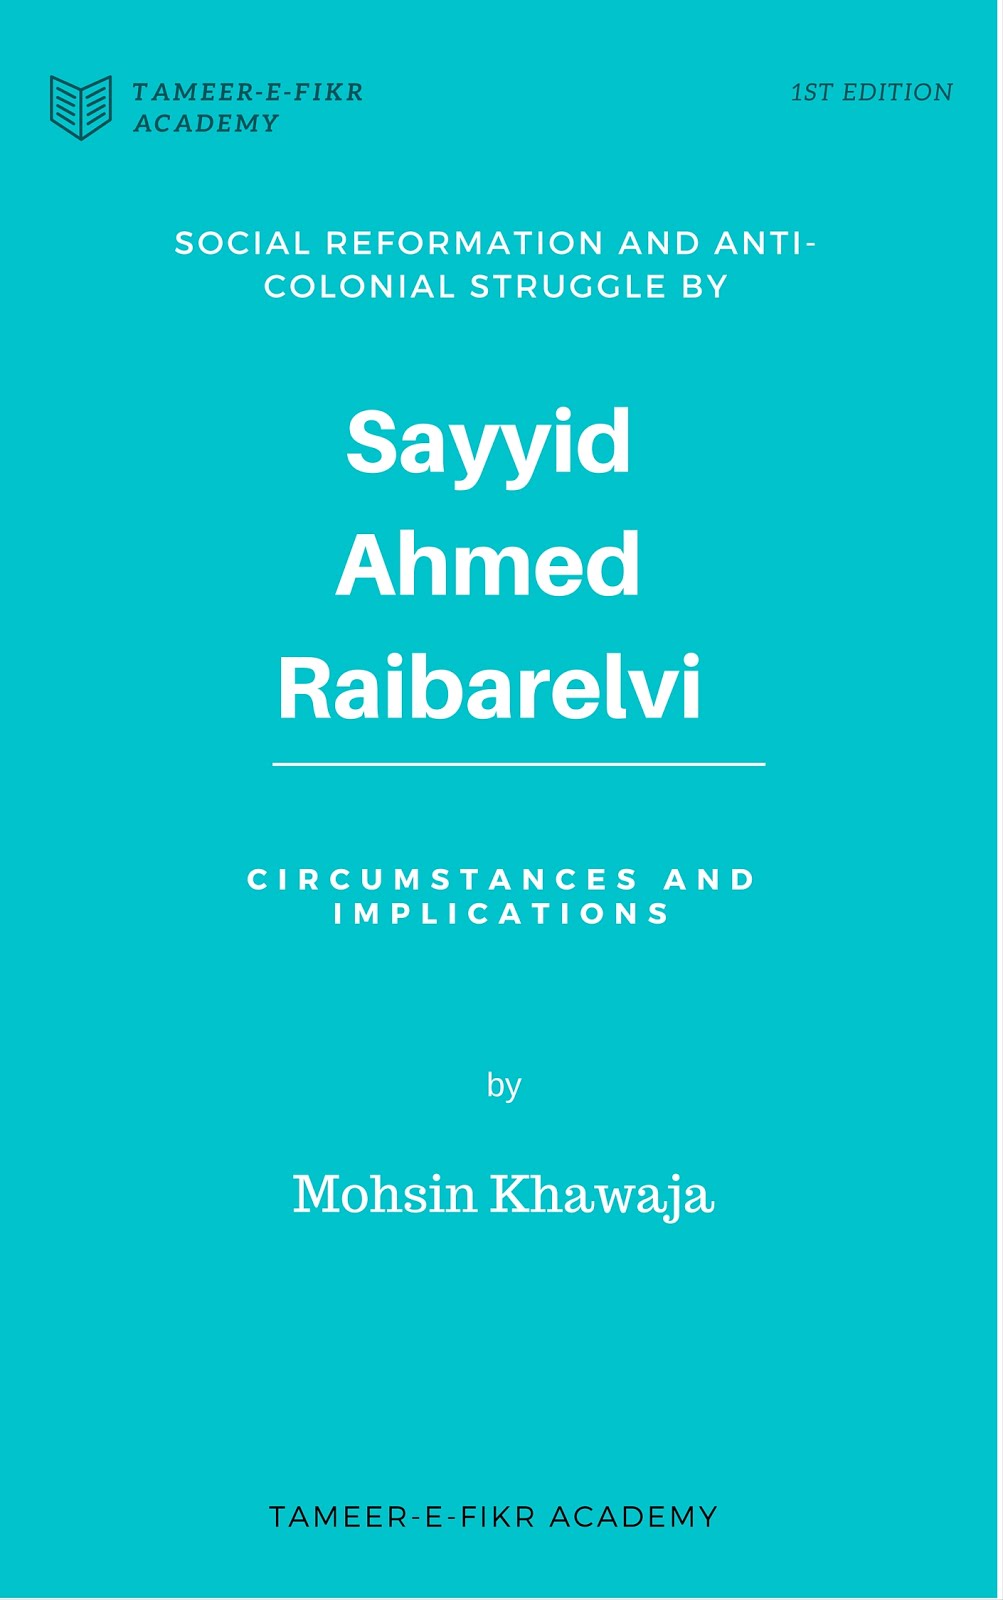 The Movement of Sayyid Ahmed RaiBarelvi